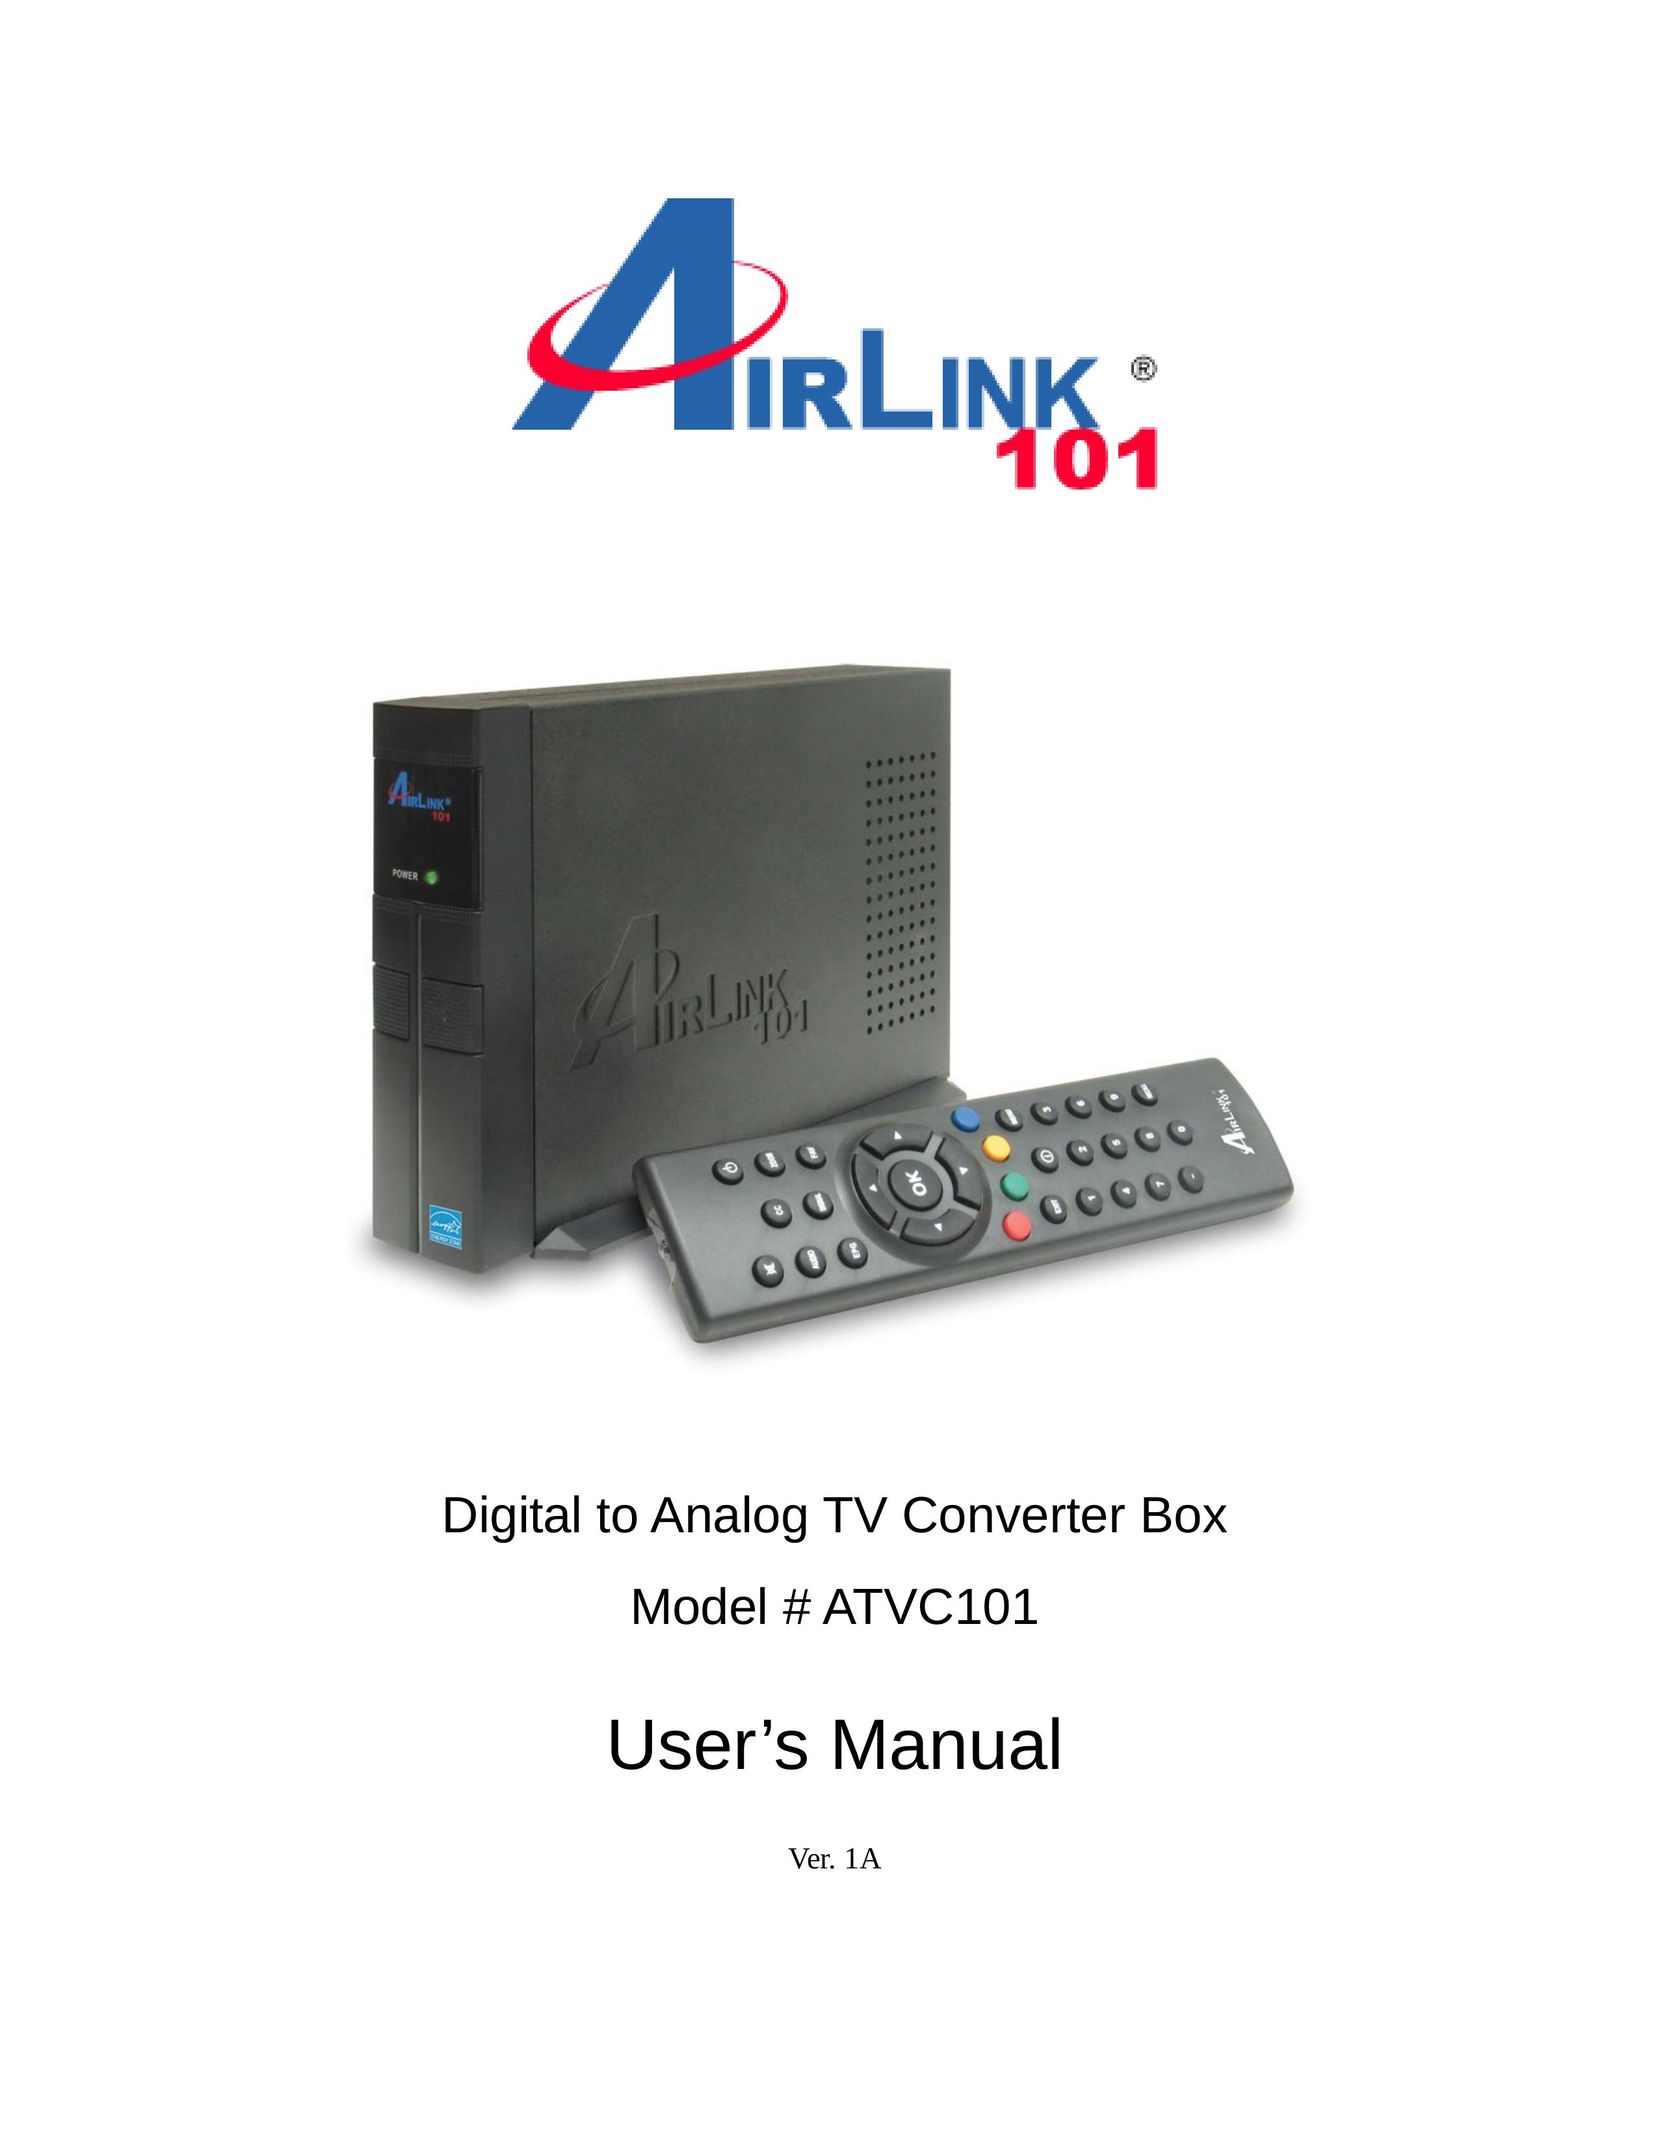 Airlink101 ATVC101 TV Converter Box User Manual